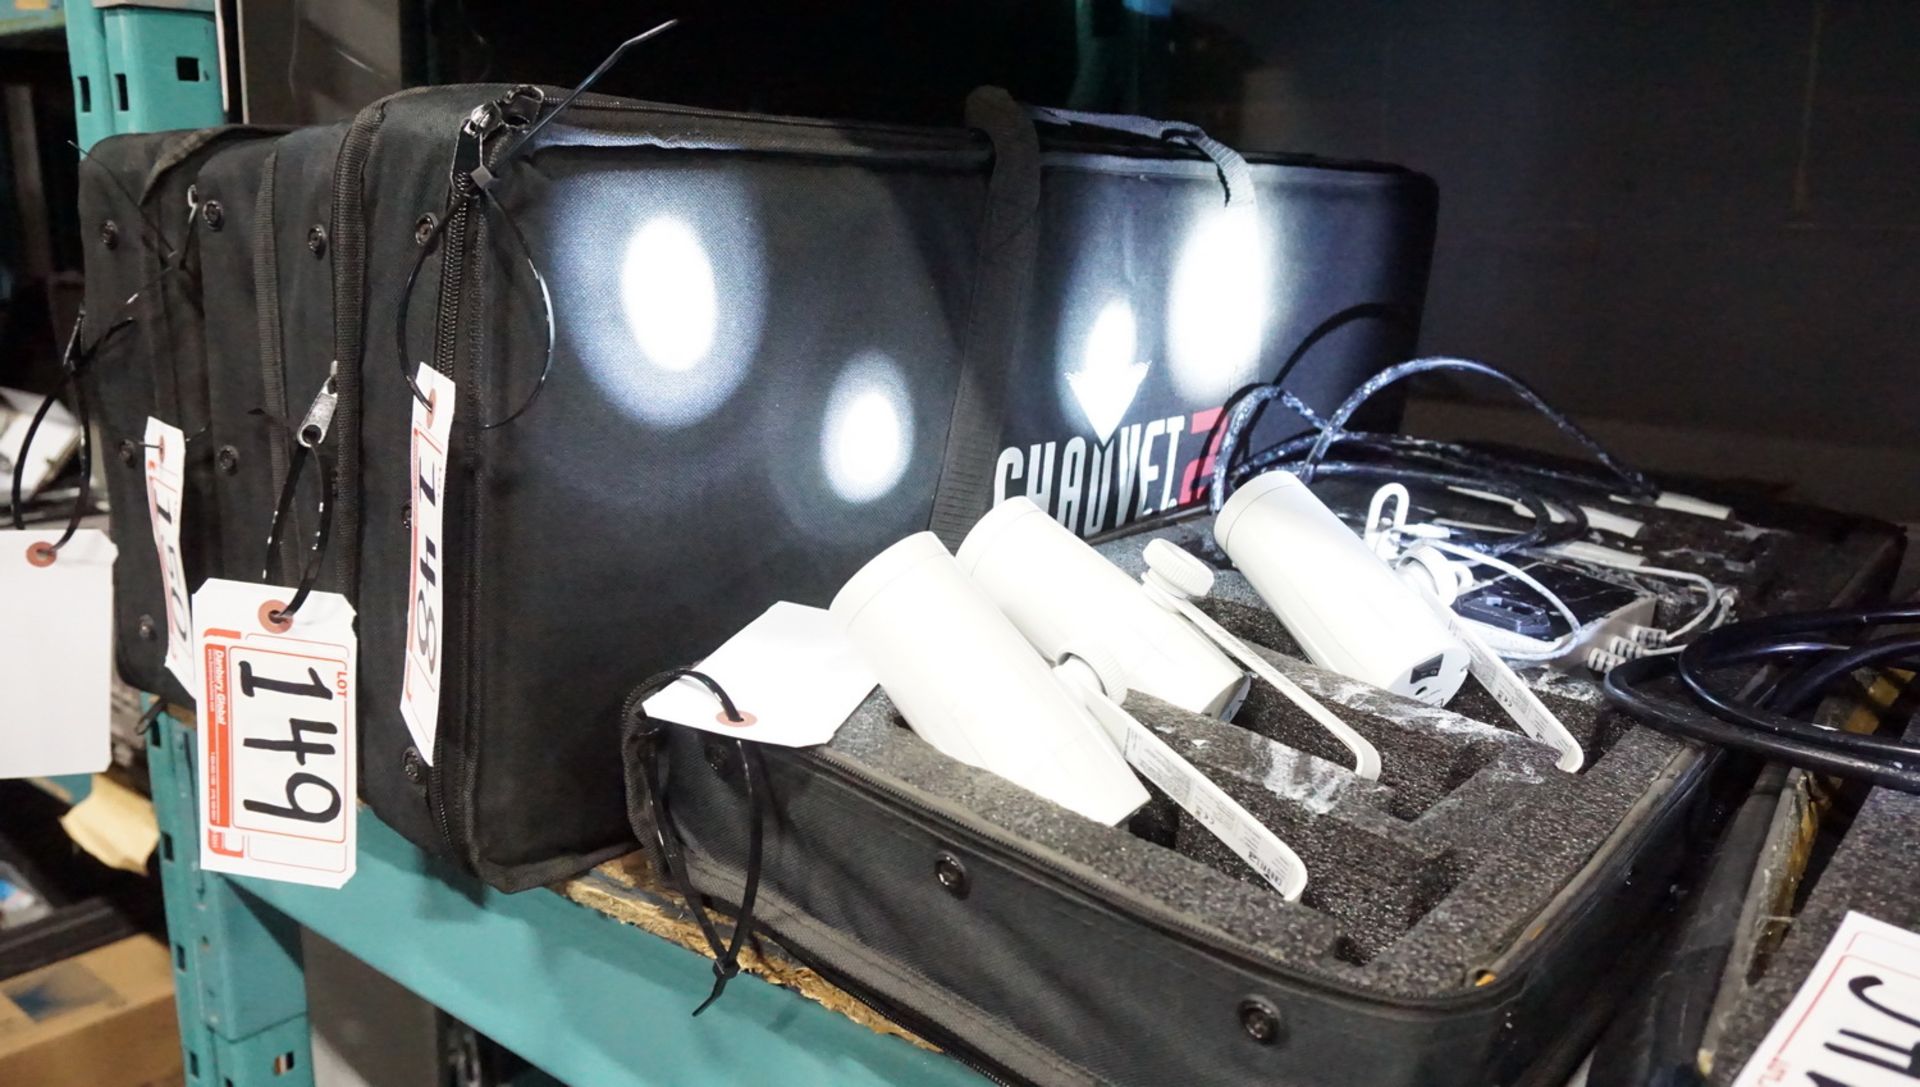 LOT - CHAUVET DJ EZPIN IRC WIRELESS BATTERY POWERED RECHARGEABLE LED PIN SPOT LIGHTS (6 UNITS)